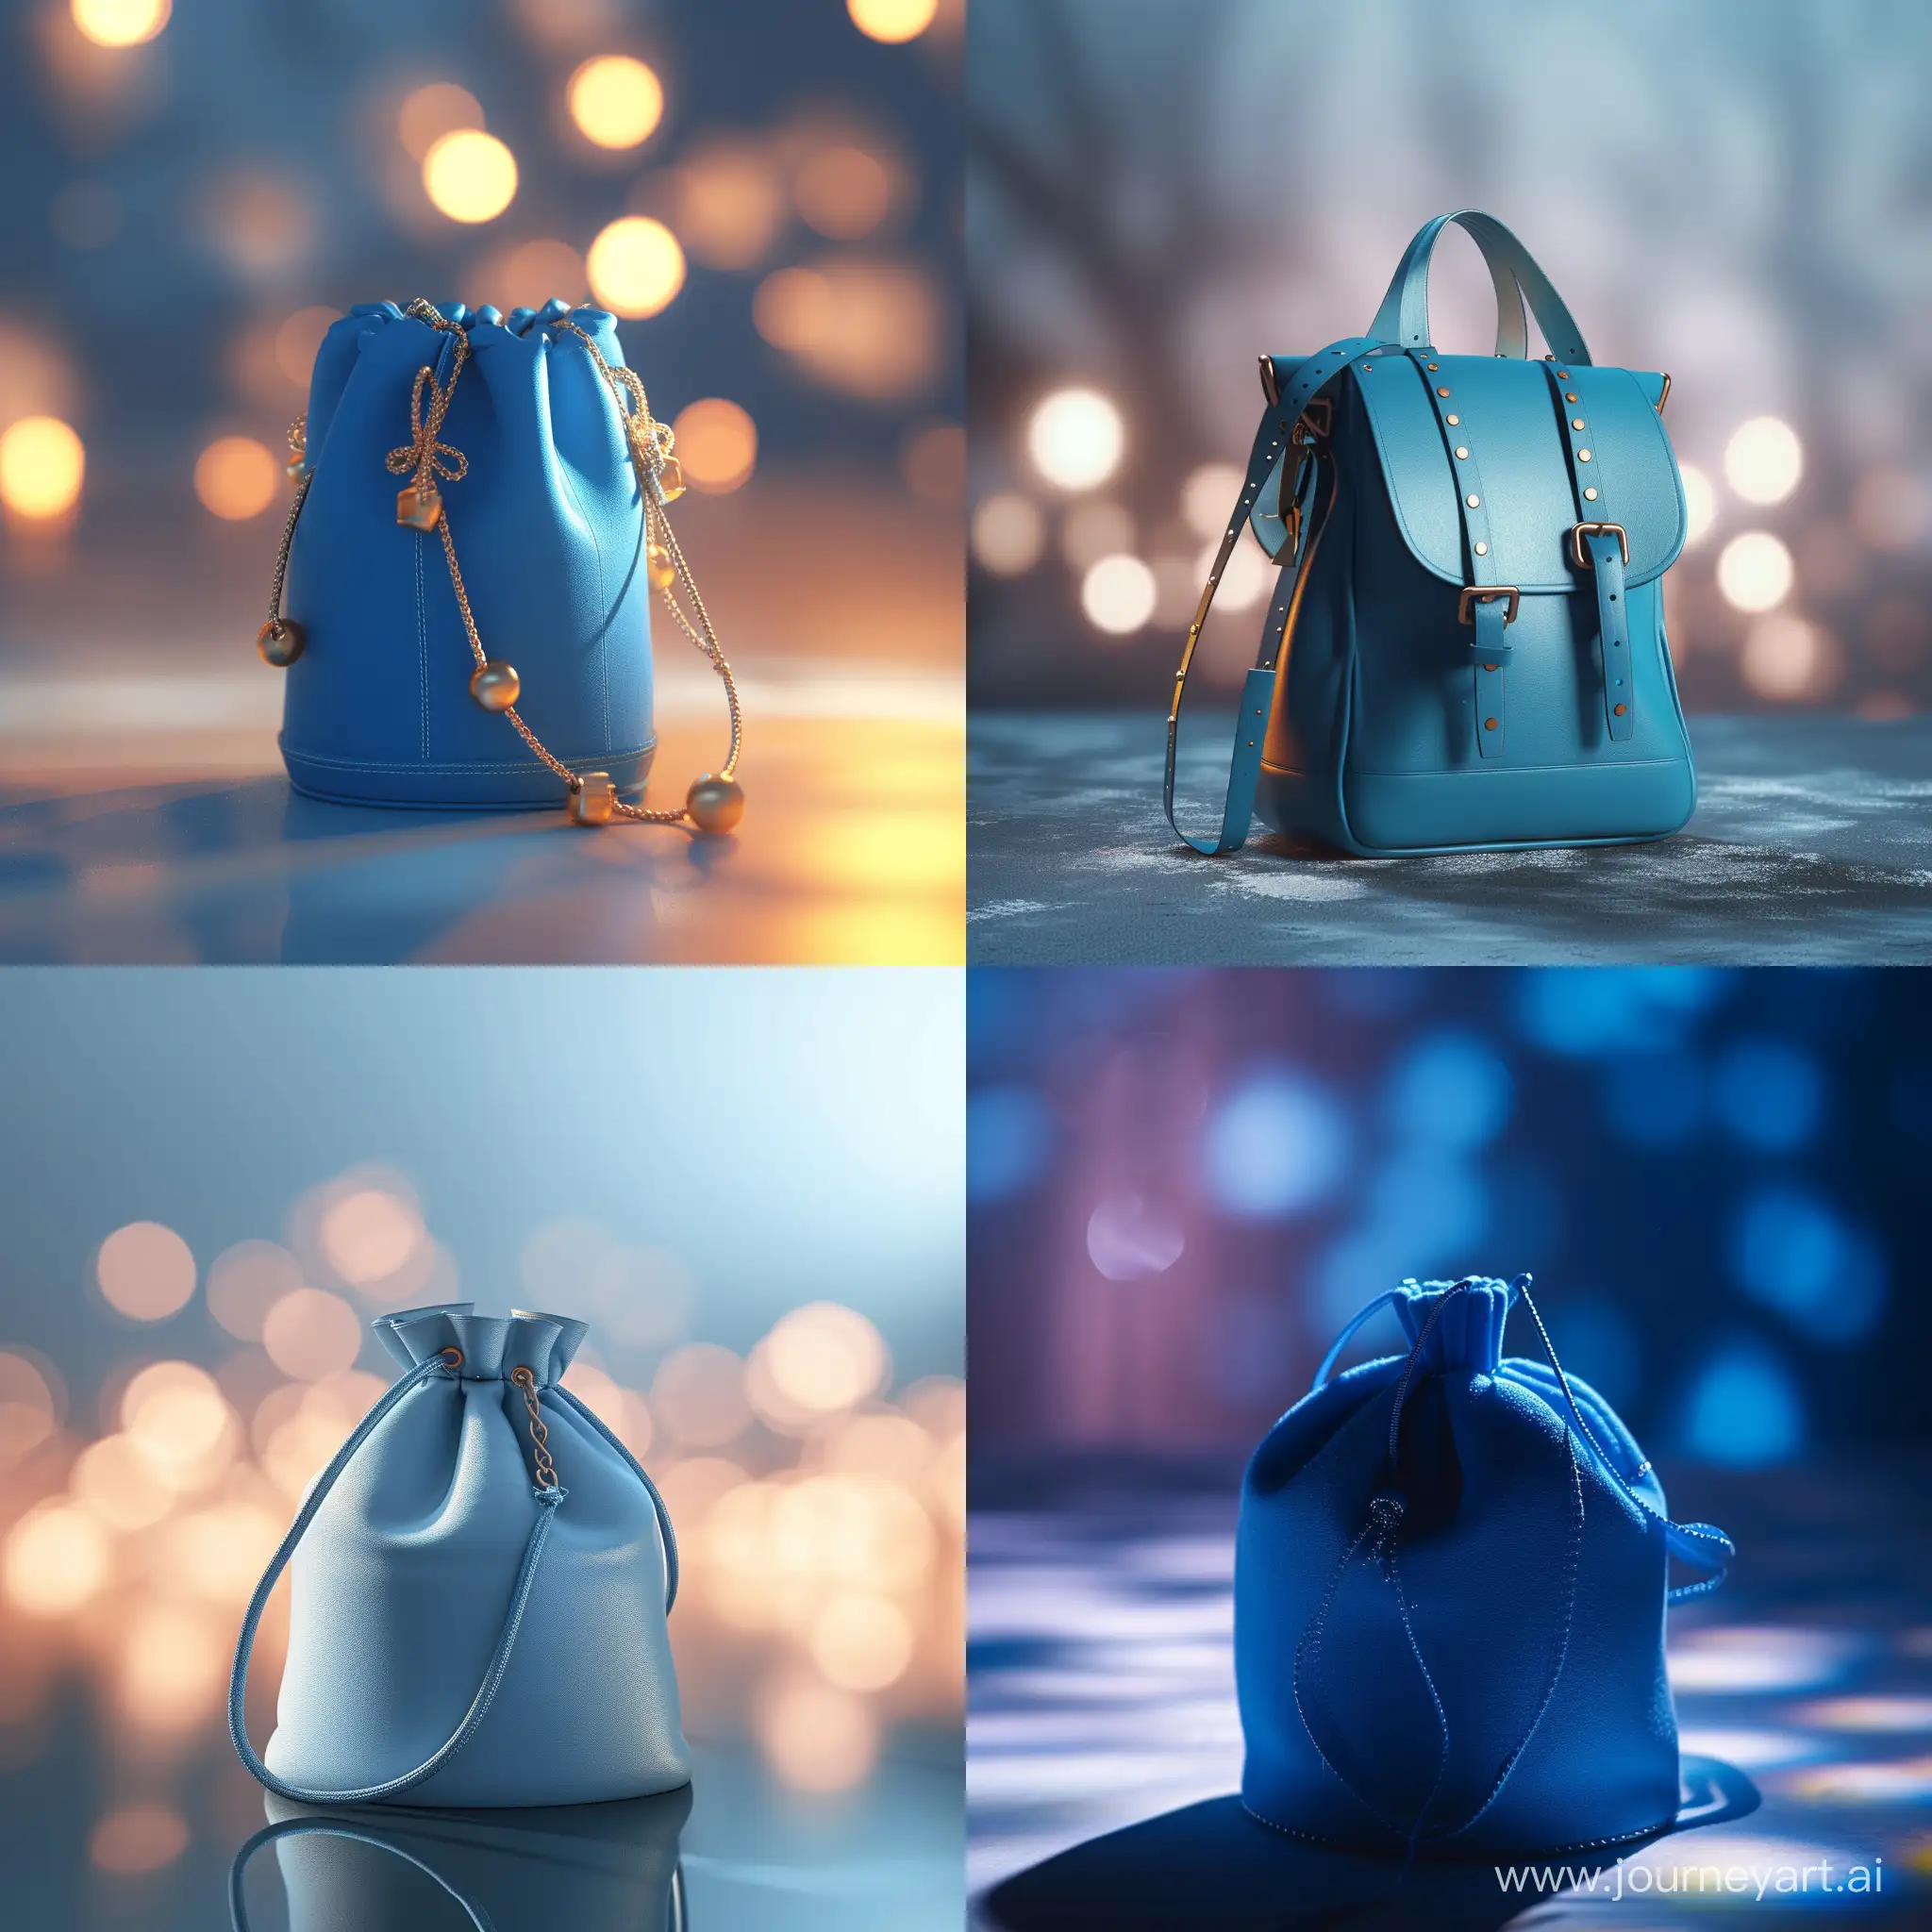 bag blue, ((((cinematic look)))), soothing tones, contour light, bokeh background,  Realistic_v7:2,  more_details:0.5